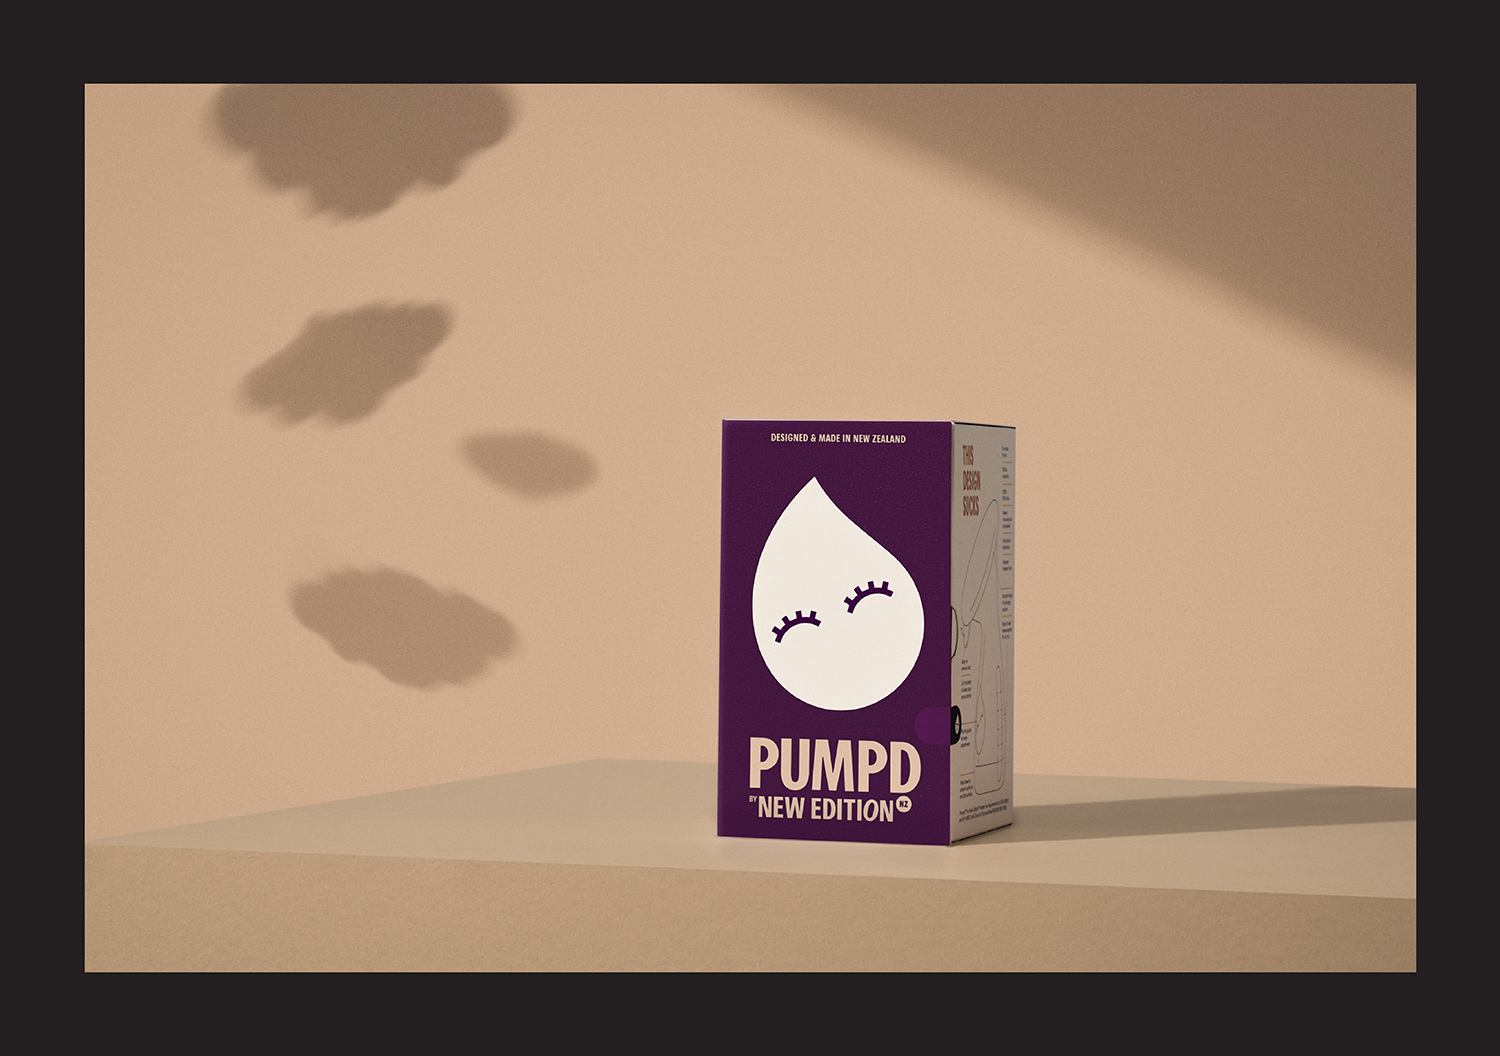 PUMPD: A Beautifully Designed Breast Pump Line